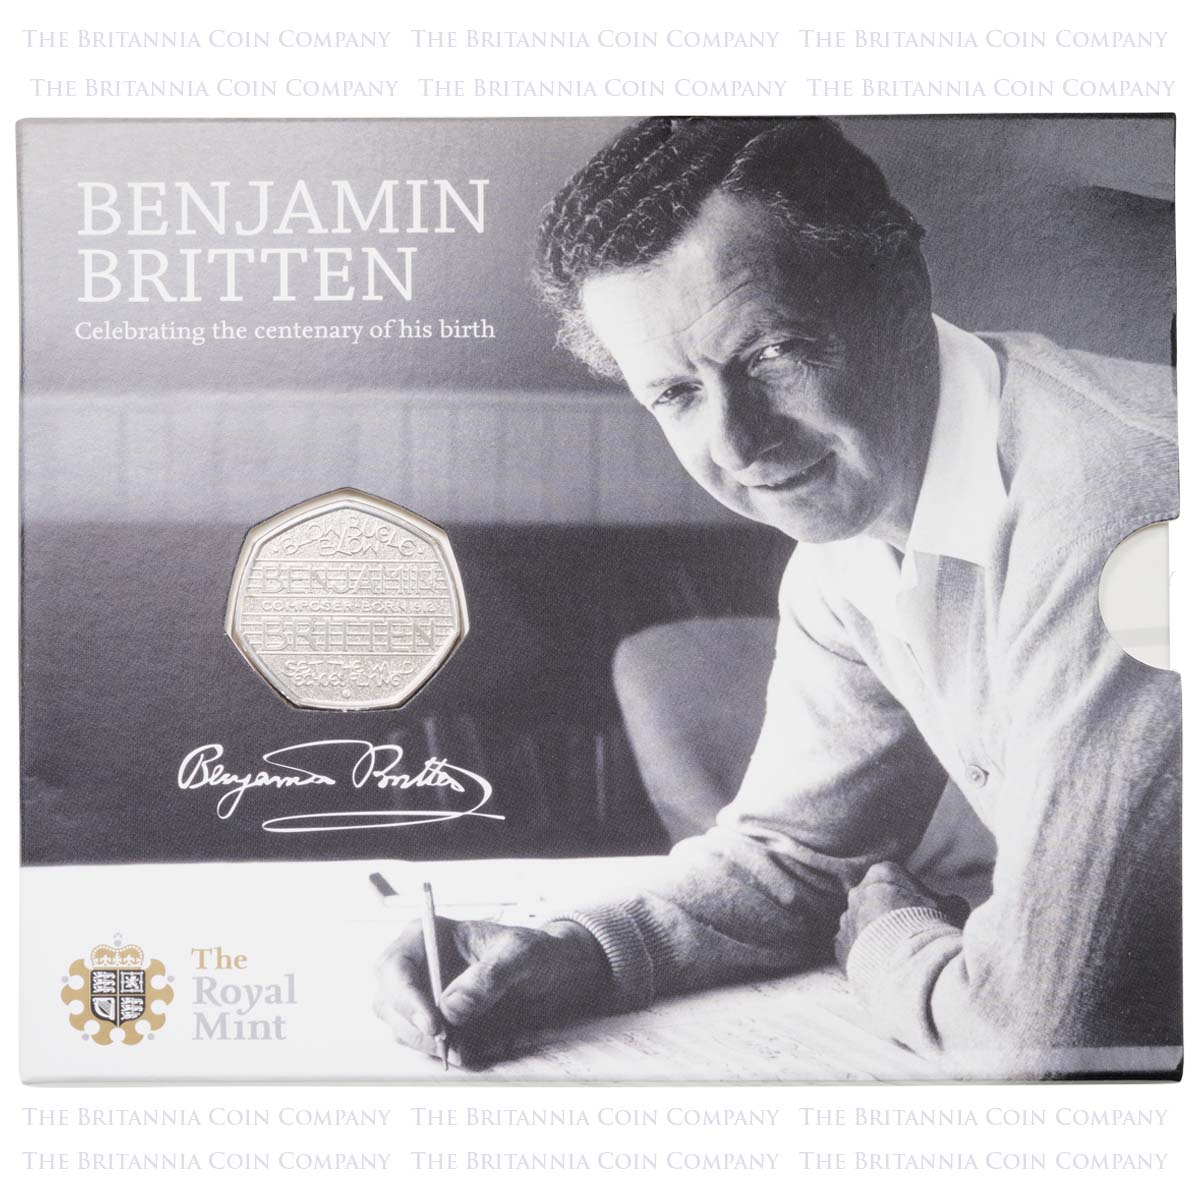 UK13BBBU 2013 Benjamin Britten Fifty Pence Brilliant Uncirculated Coin In Folder Packaging